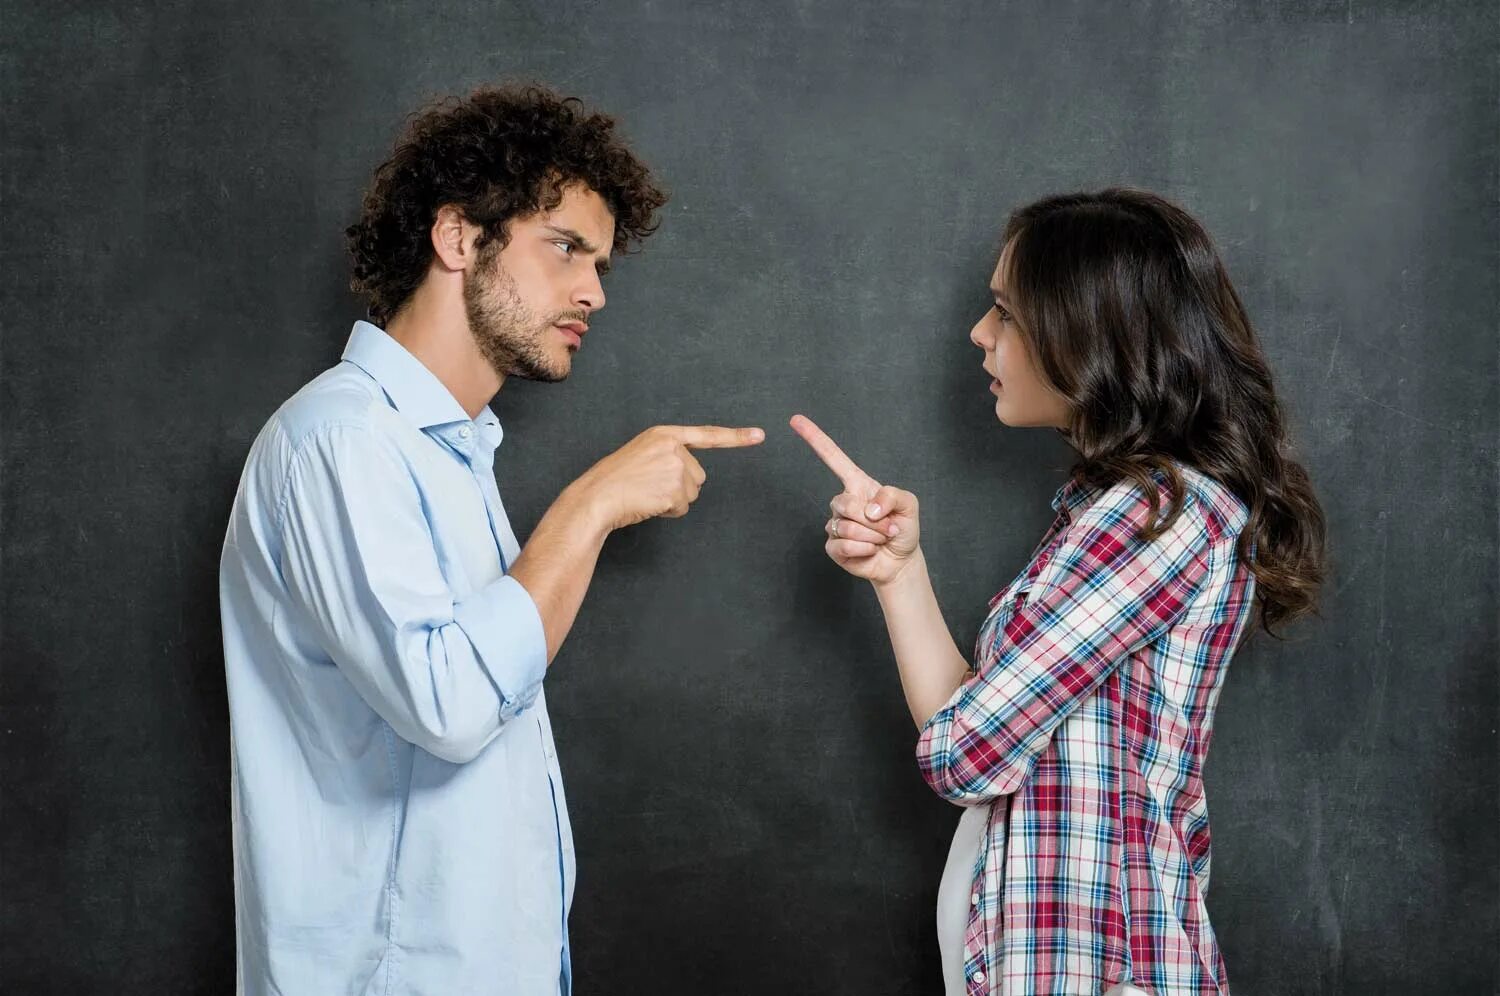 Конфликт. Люди спорят. Мужчина и женщина спорят. Спор между мужчиной и женщиной. Разговор на разных языках